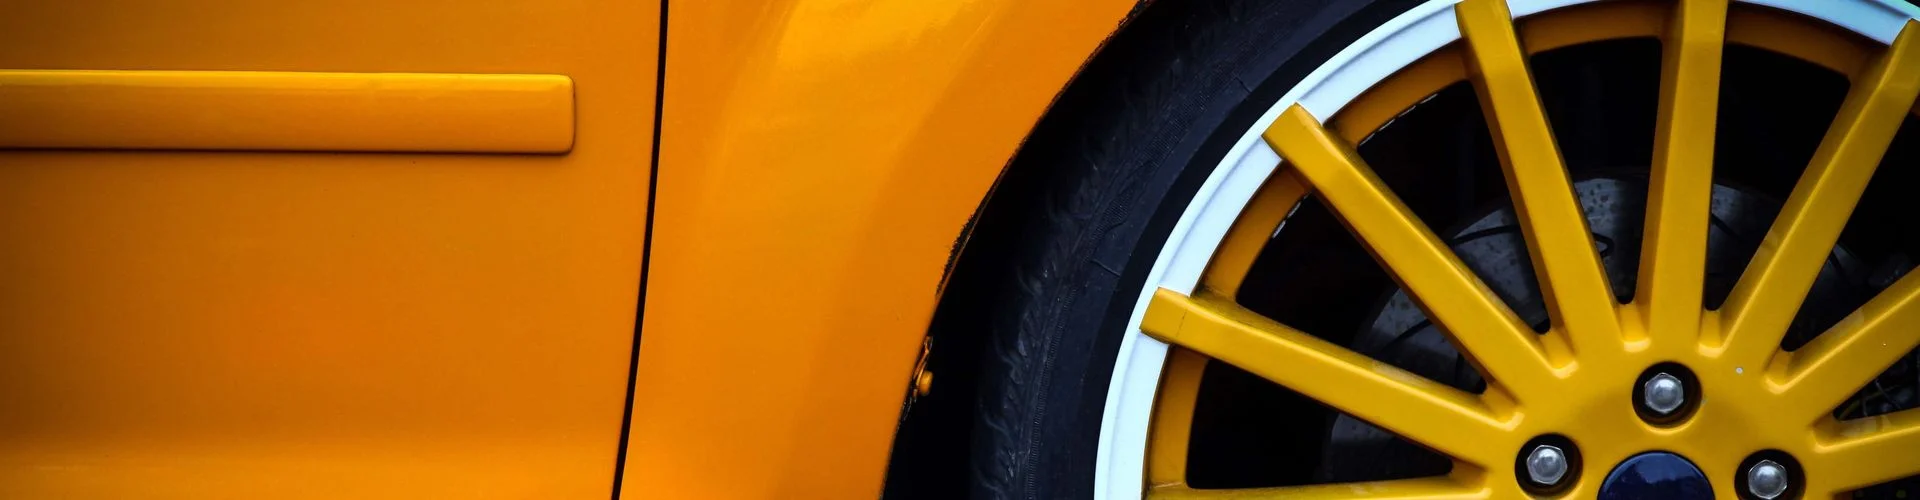 yellow_car_closeup_wheel_c_Fotolia-min.jpg